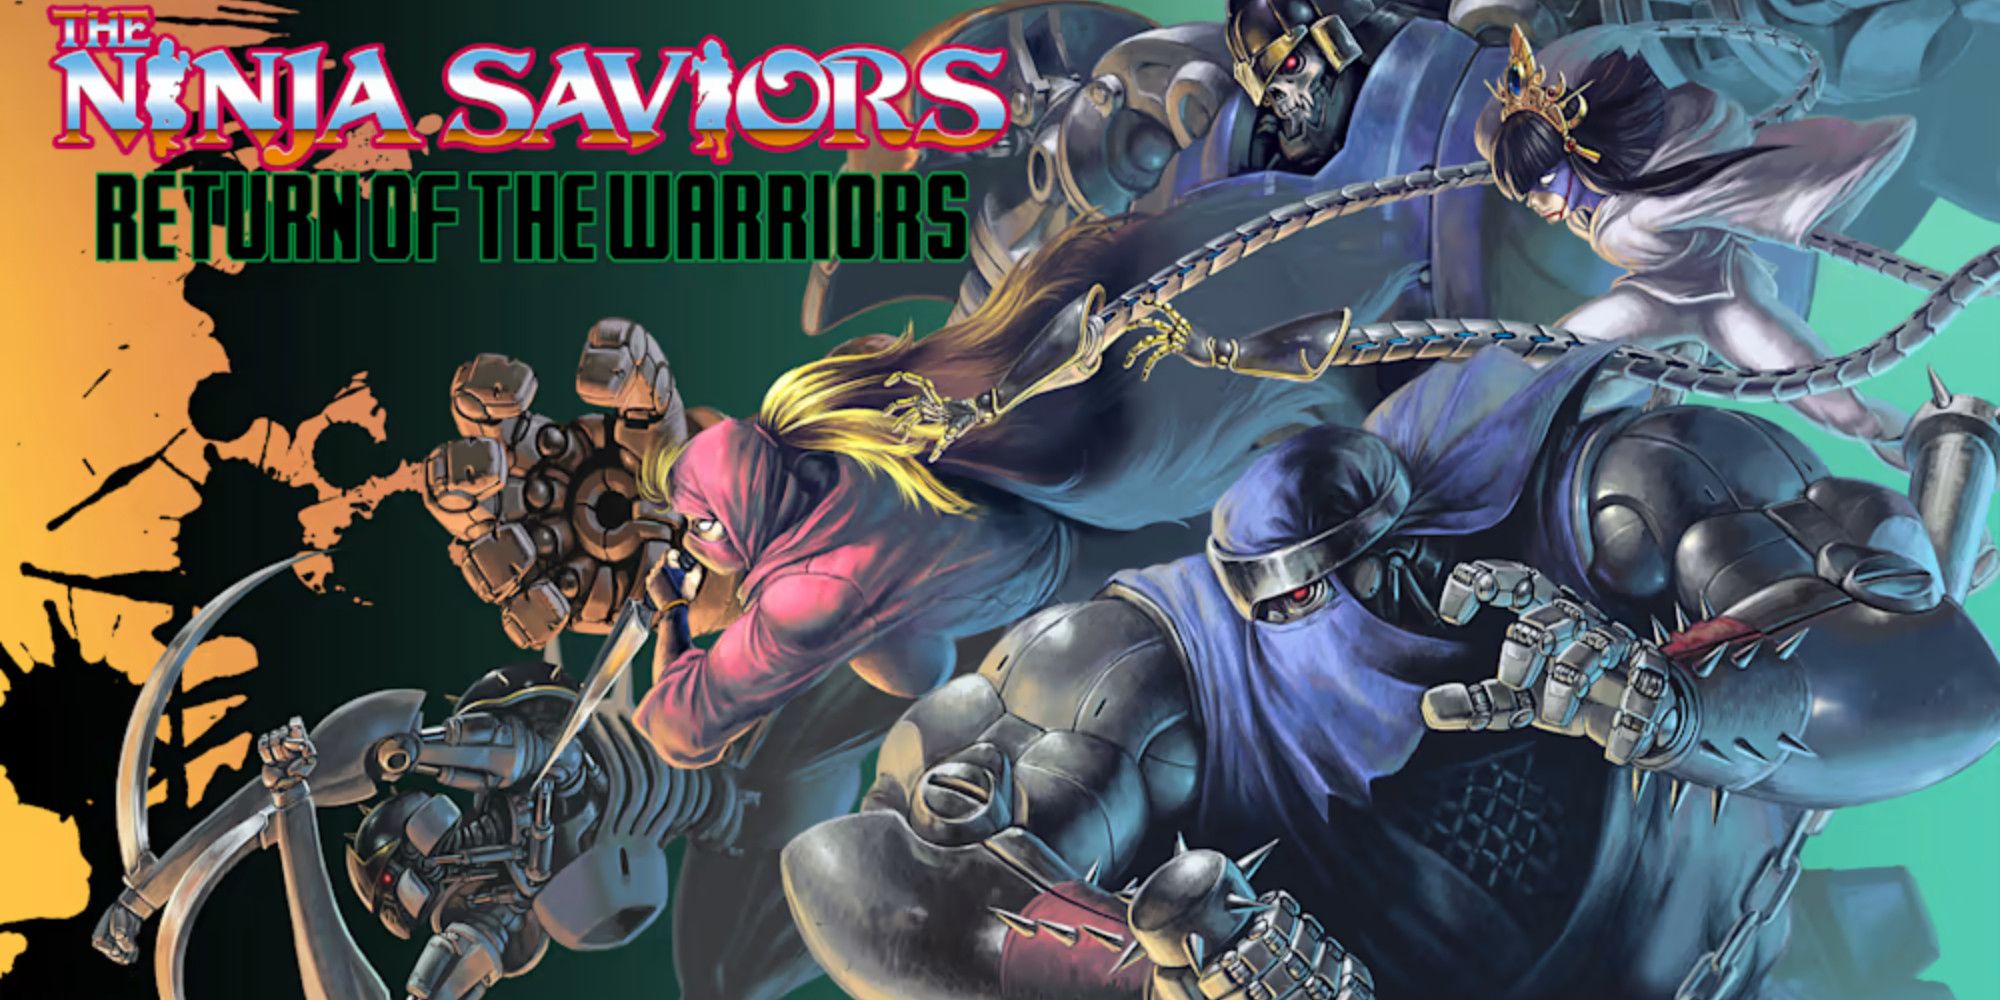 The five cyborg ninjas of Ninja Saviors